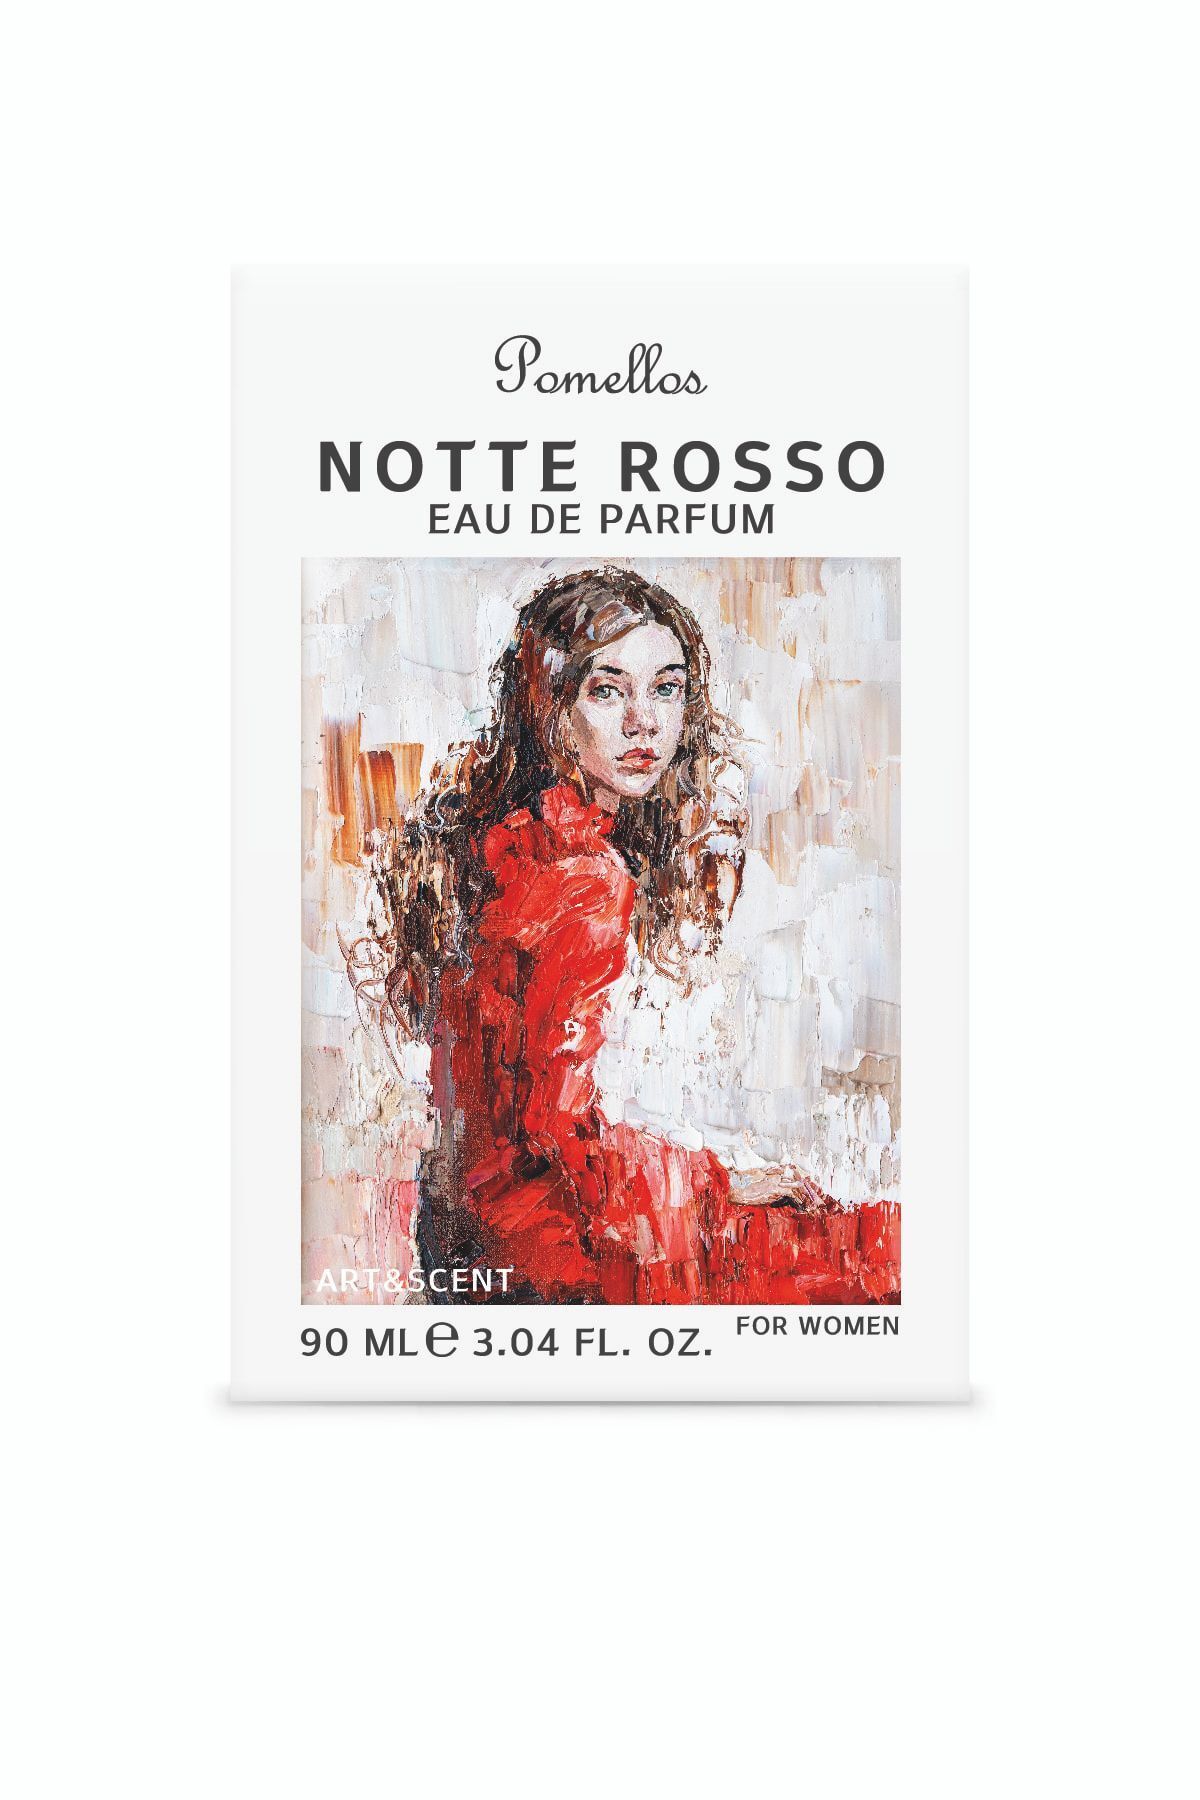 Pomellos Kadın Parfüm - Notte Rosso 90 ml